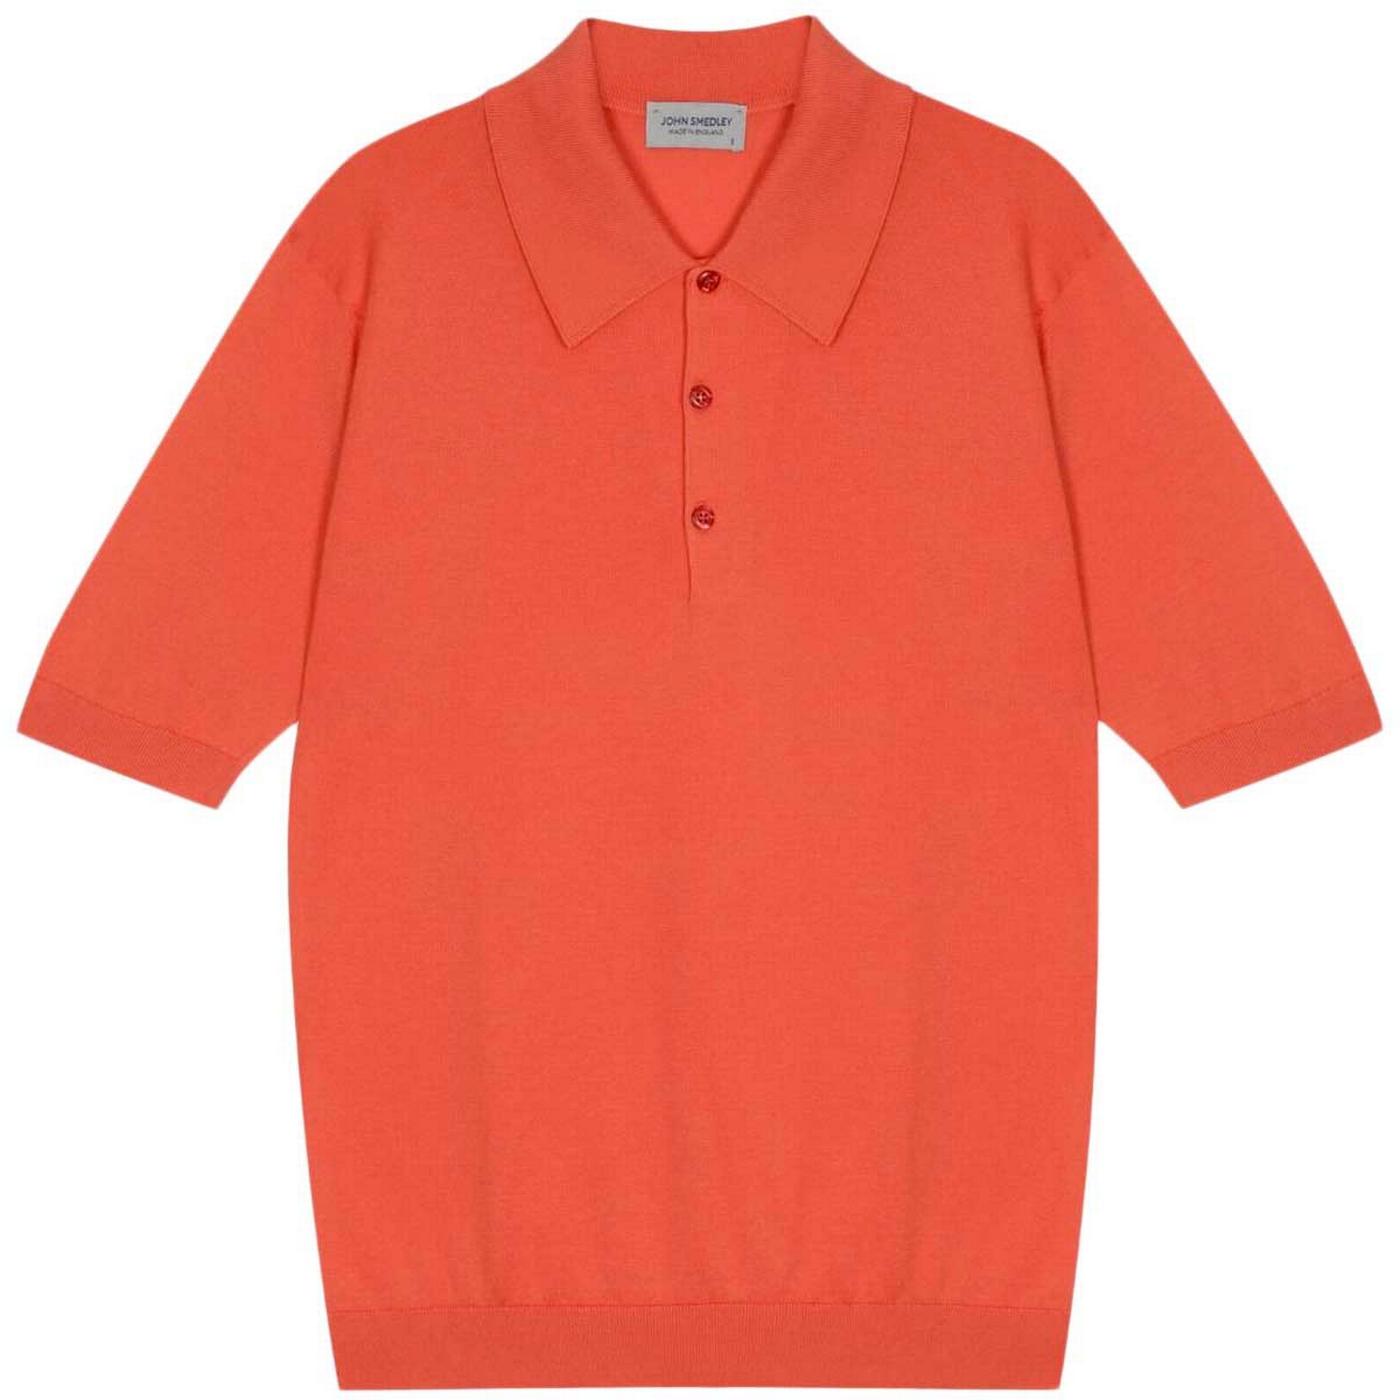 Isis JOHN SMEDLEY Classic Mod Knitted Polo Shirt O